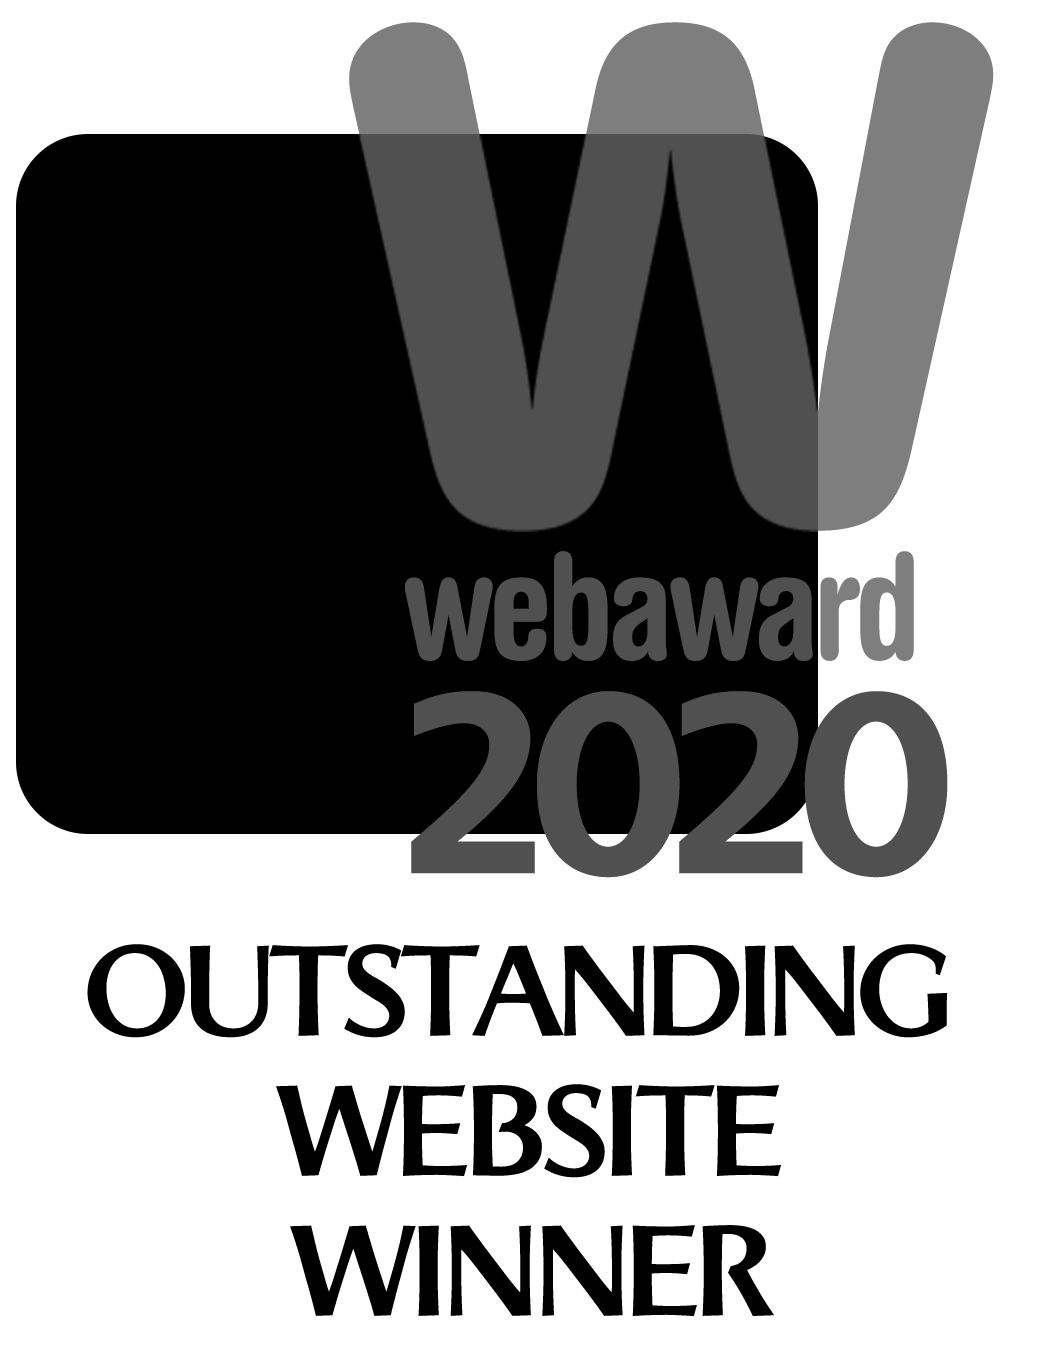 WebAwards Outstanding Website Winner 2020